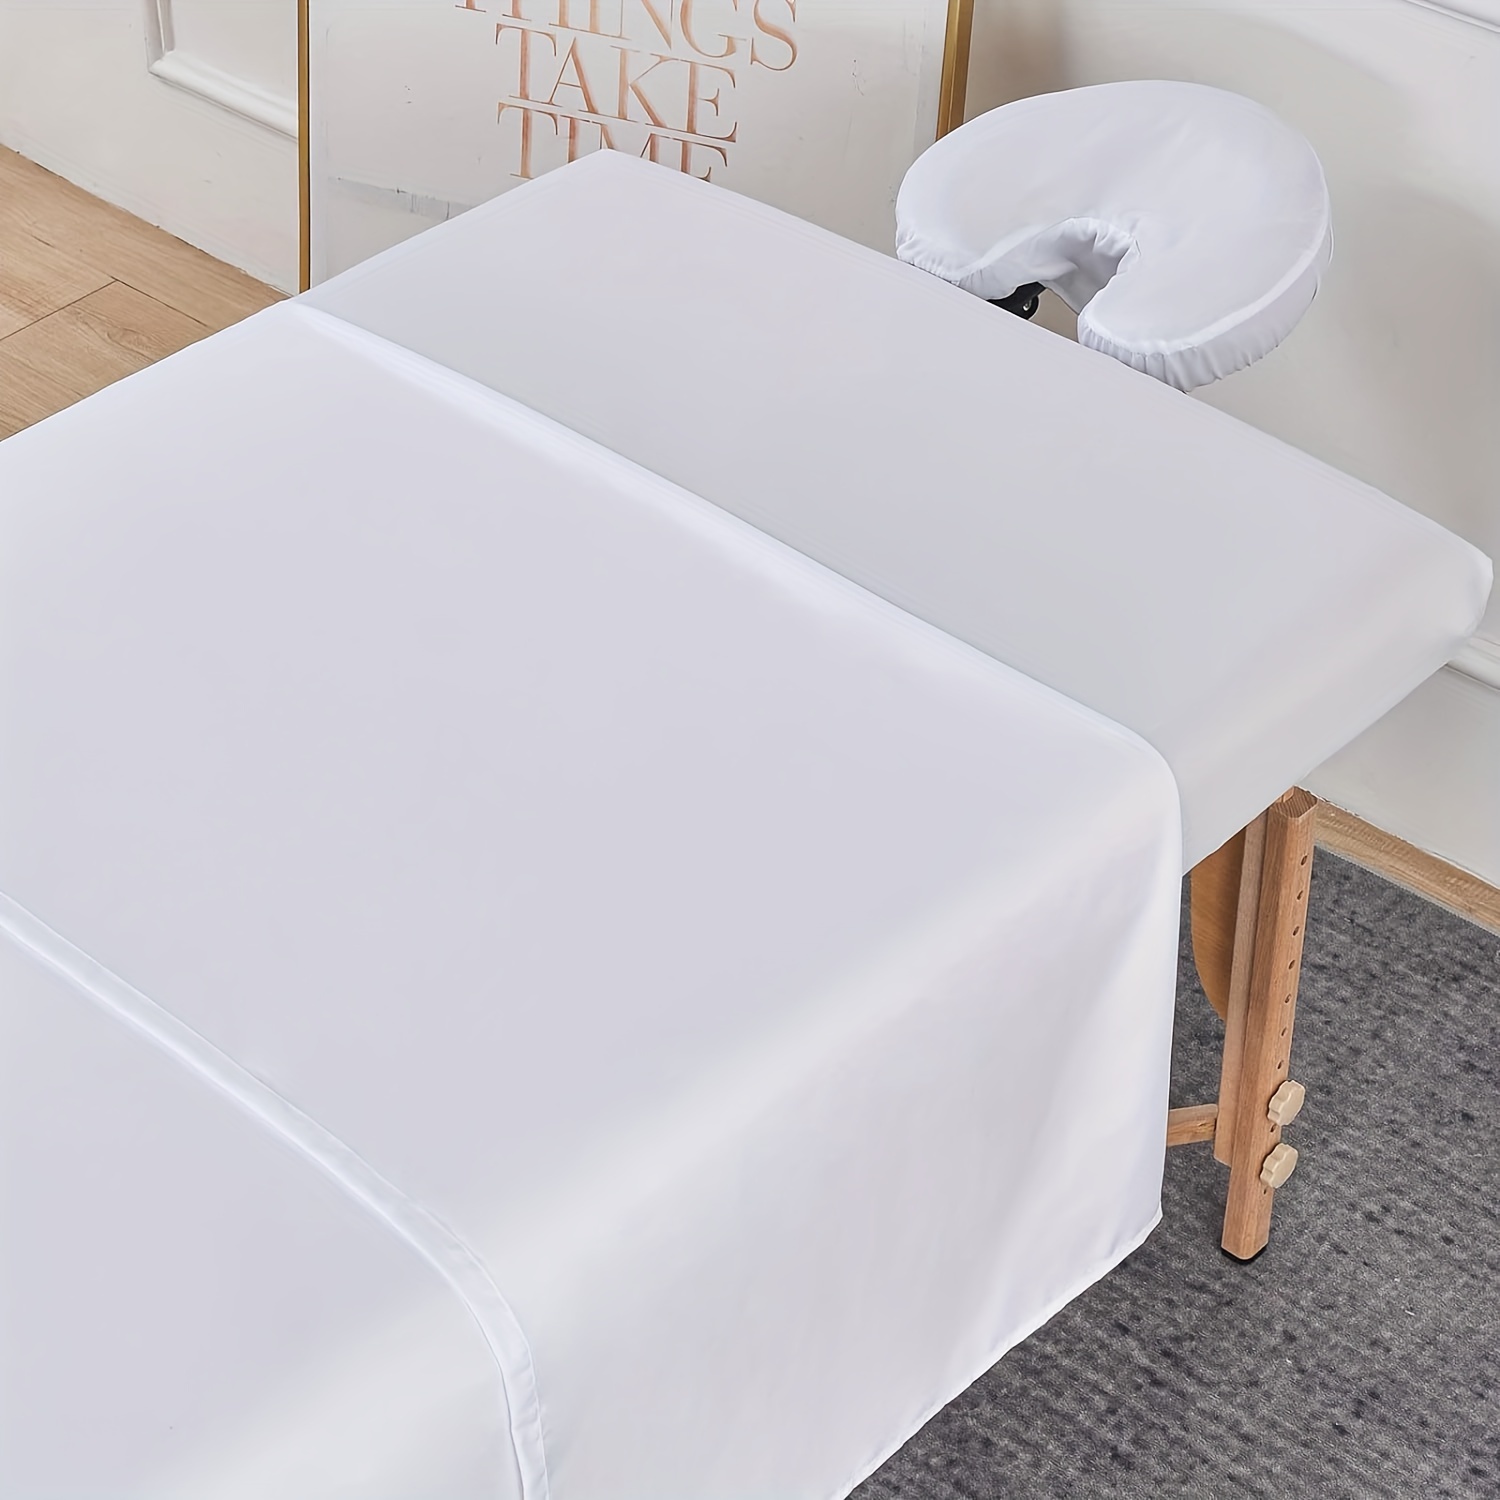 

3pcs Microfiber Massage Sheet Set, For Massage Tables, Includes Massage Table Cover, Massage Fitted Sheet, And Massage Face Rest Cover, 8 Colors